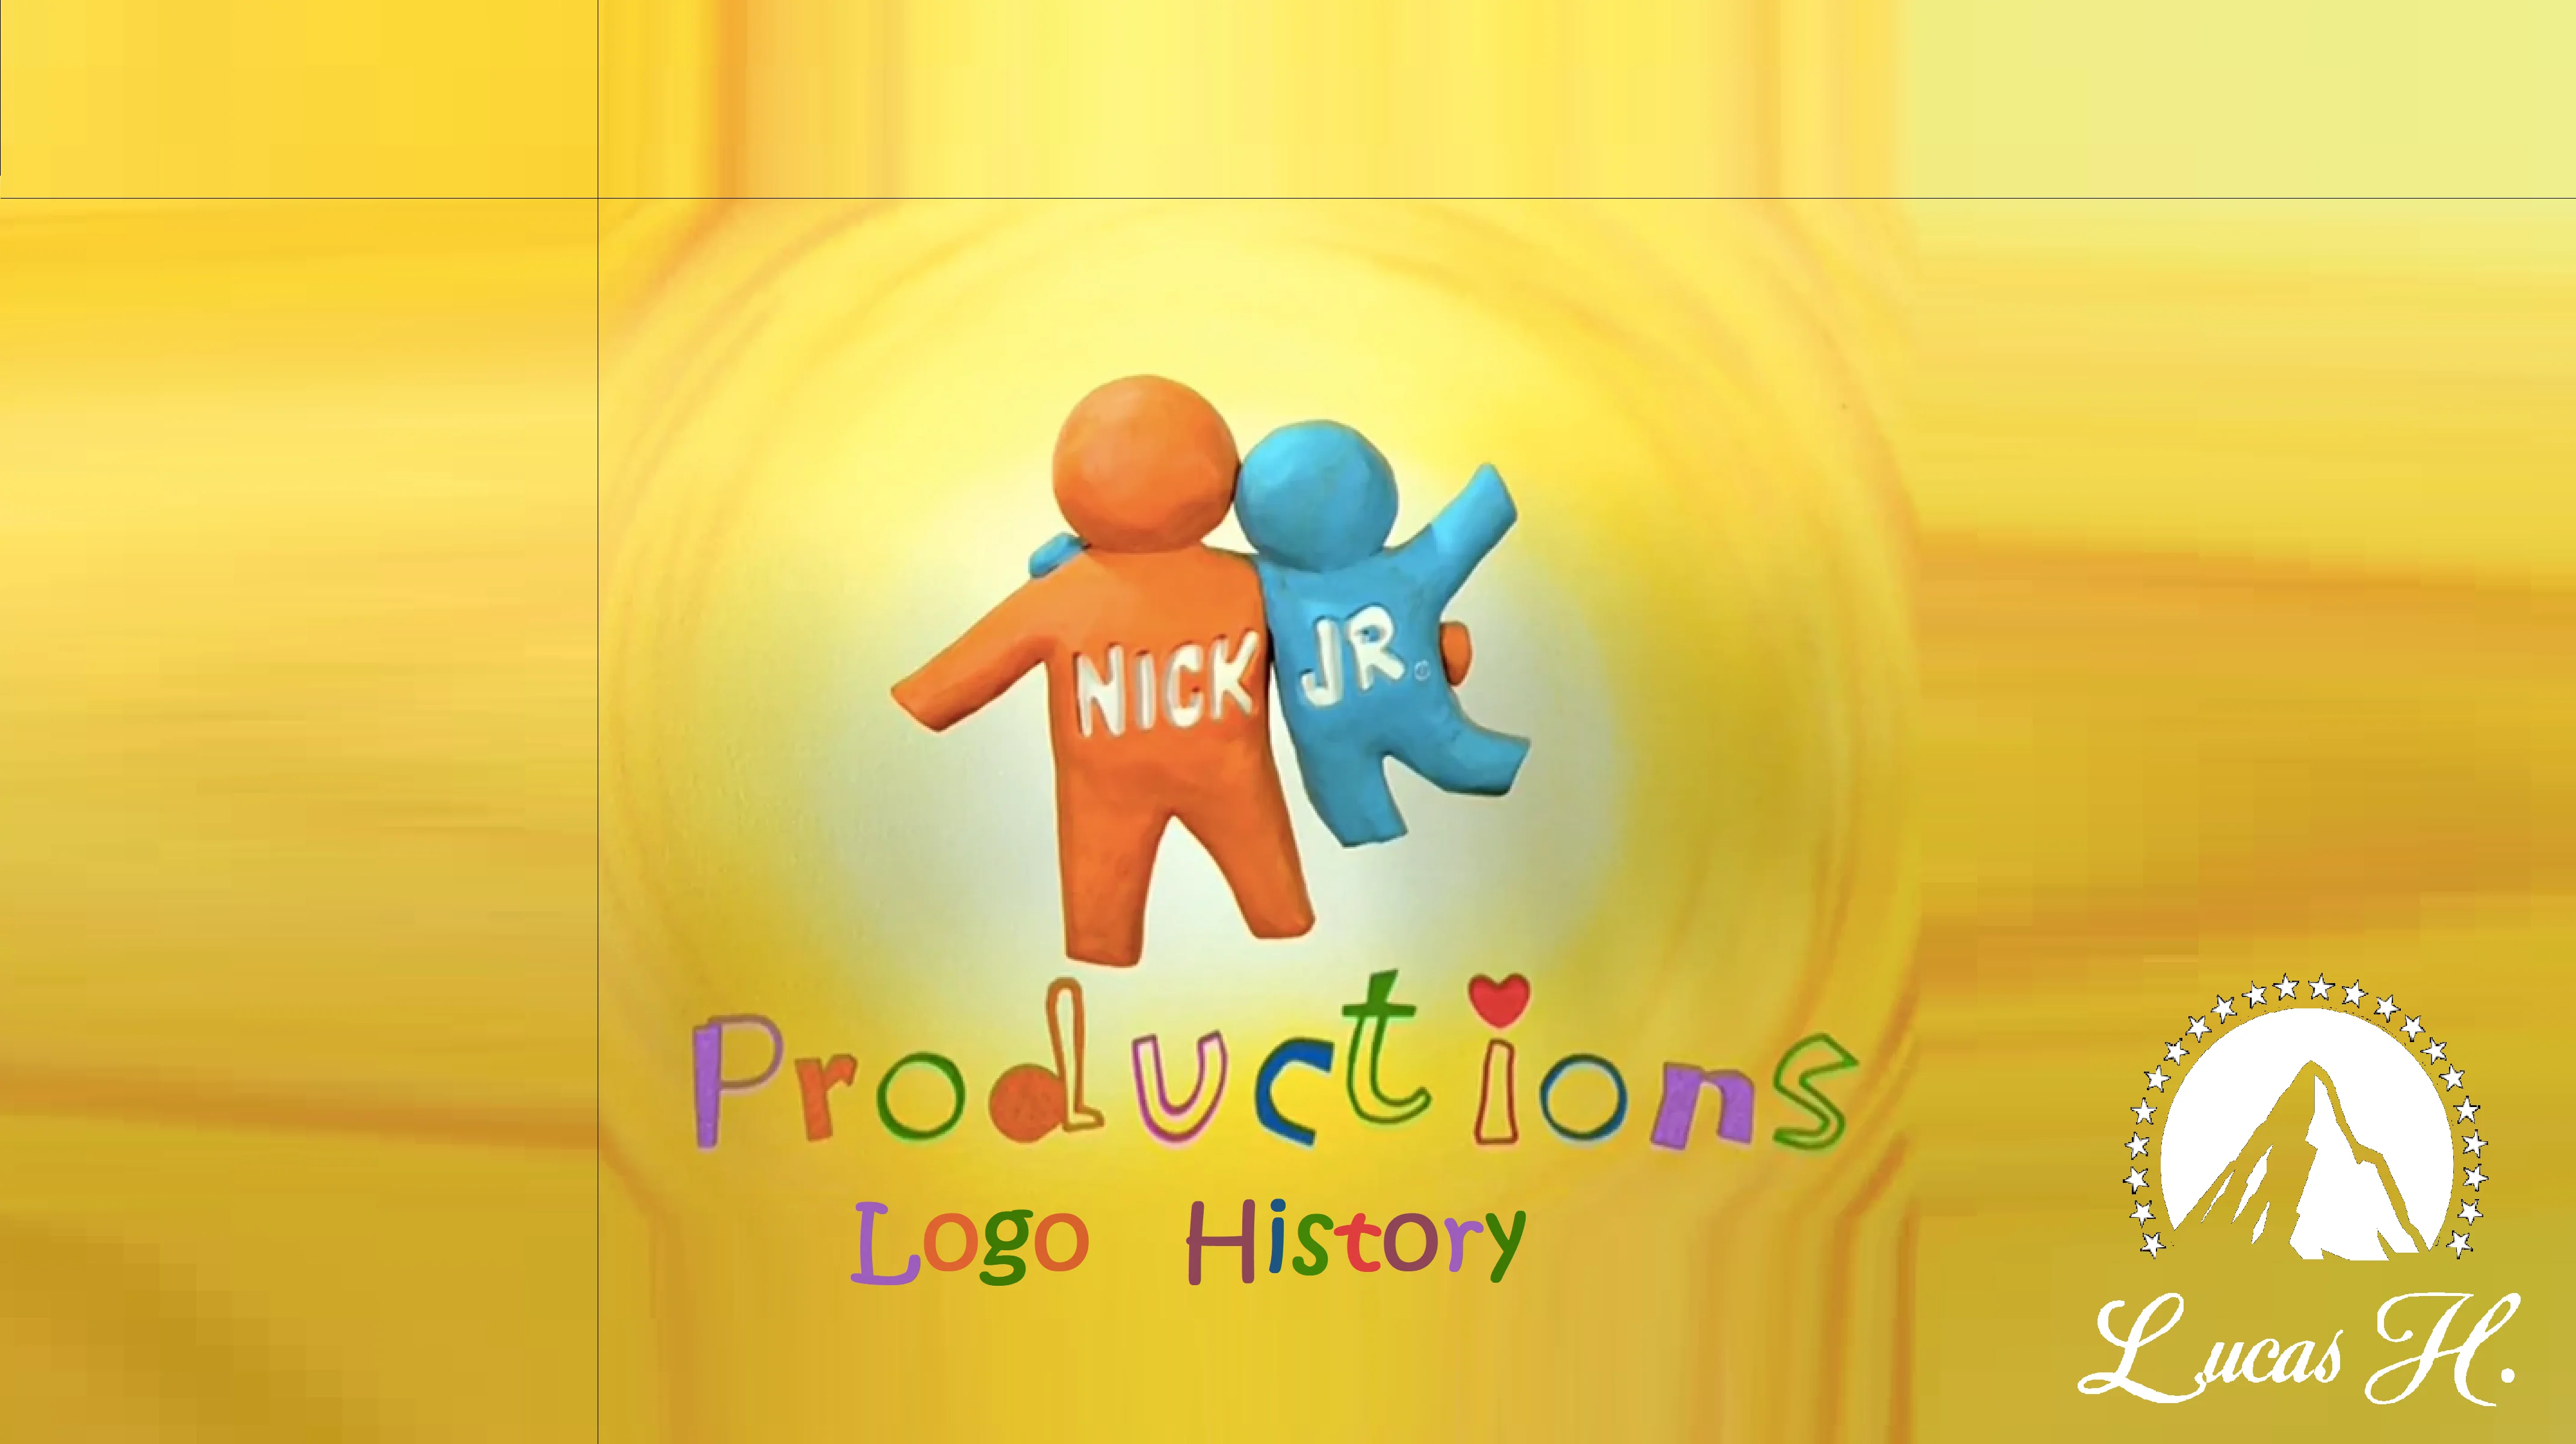 Nick Jr. Productions Logo History on Vimeo